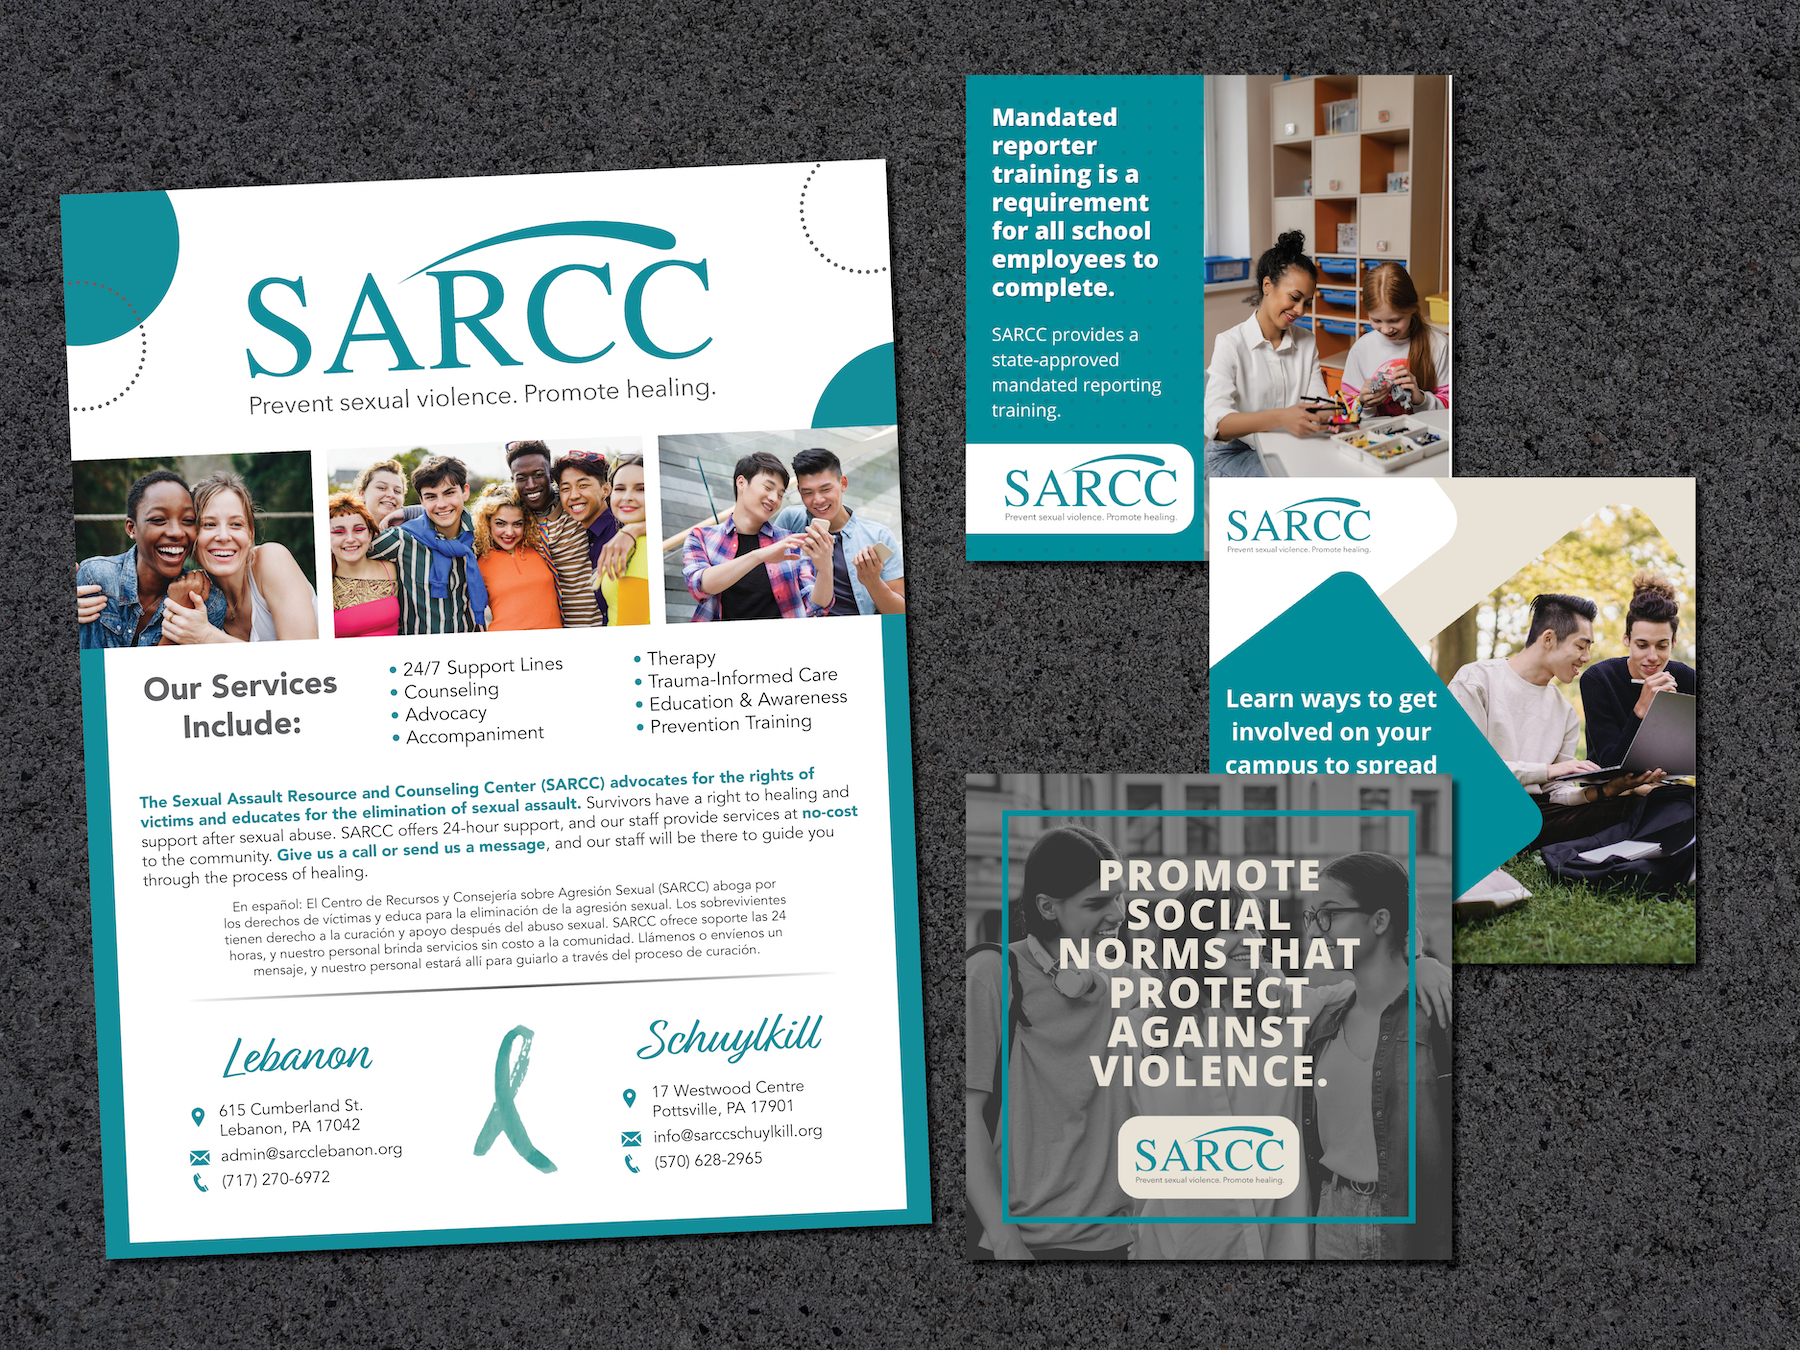 SARCC Marketing Campaign